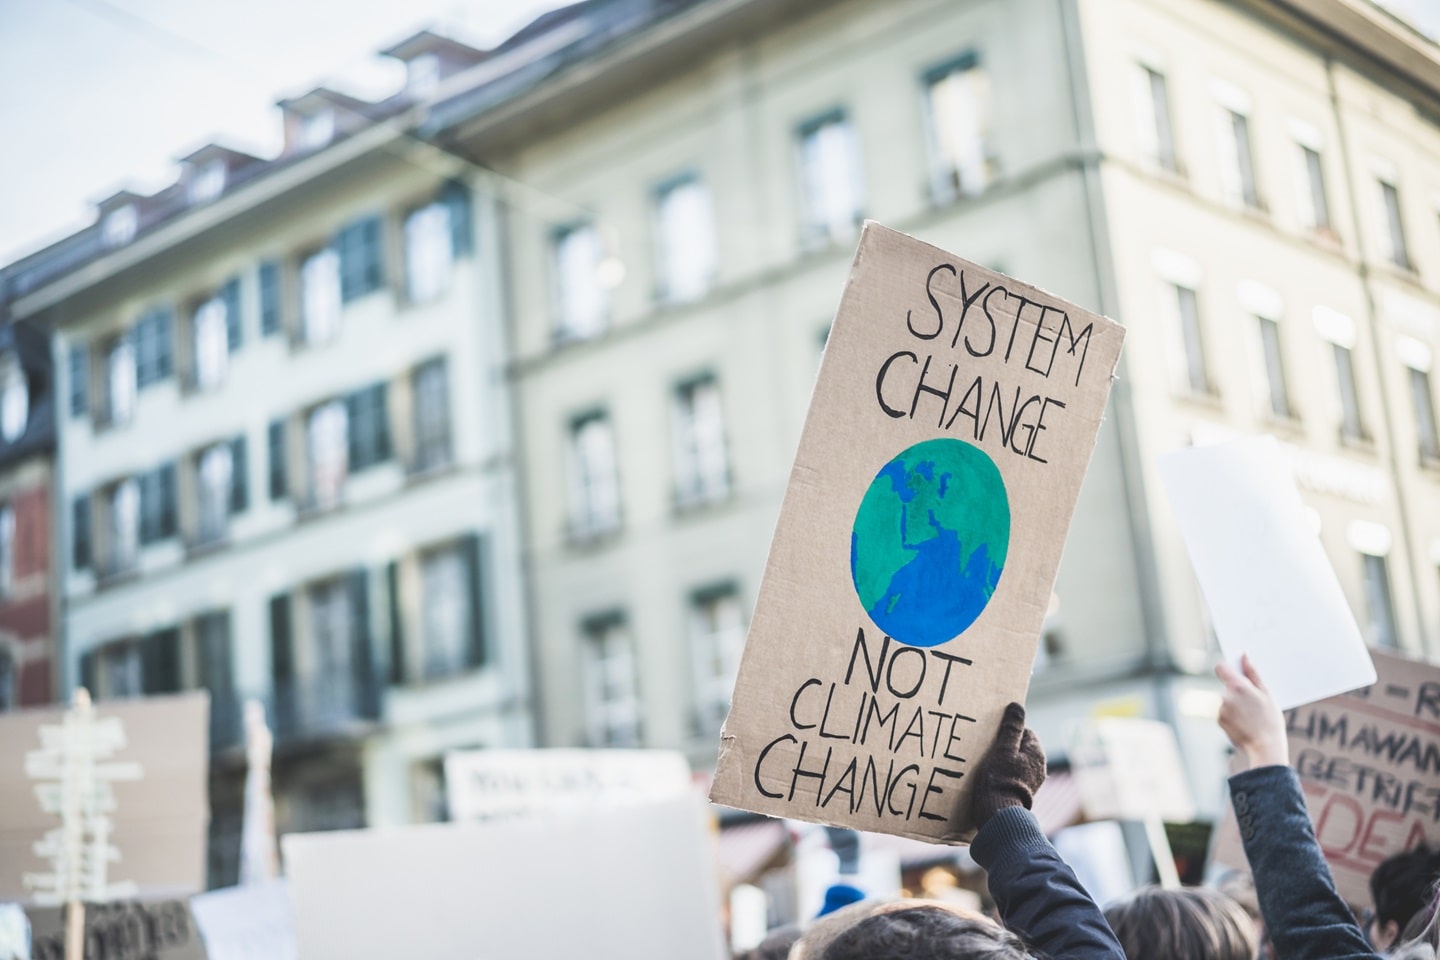 Processo crise climática jovens portugueses